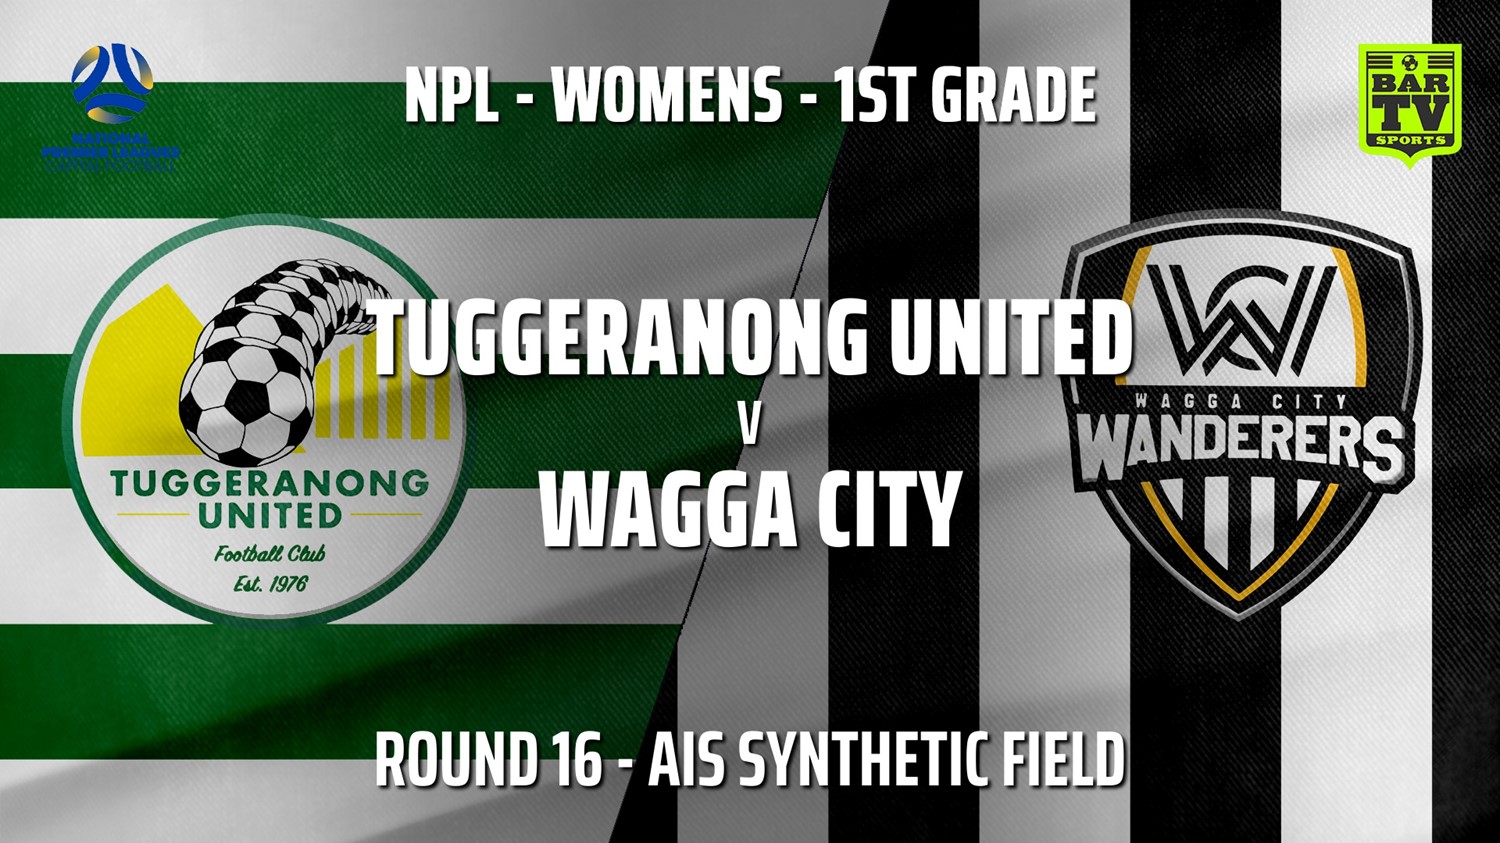 210801-Capital Womens Round 16 - Tuggeranong United FC (women) v Wagga City Wanderers FC (women) Slate Image